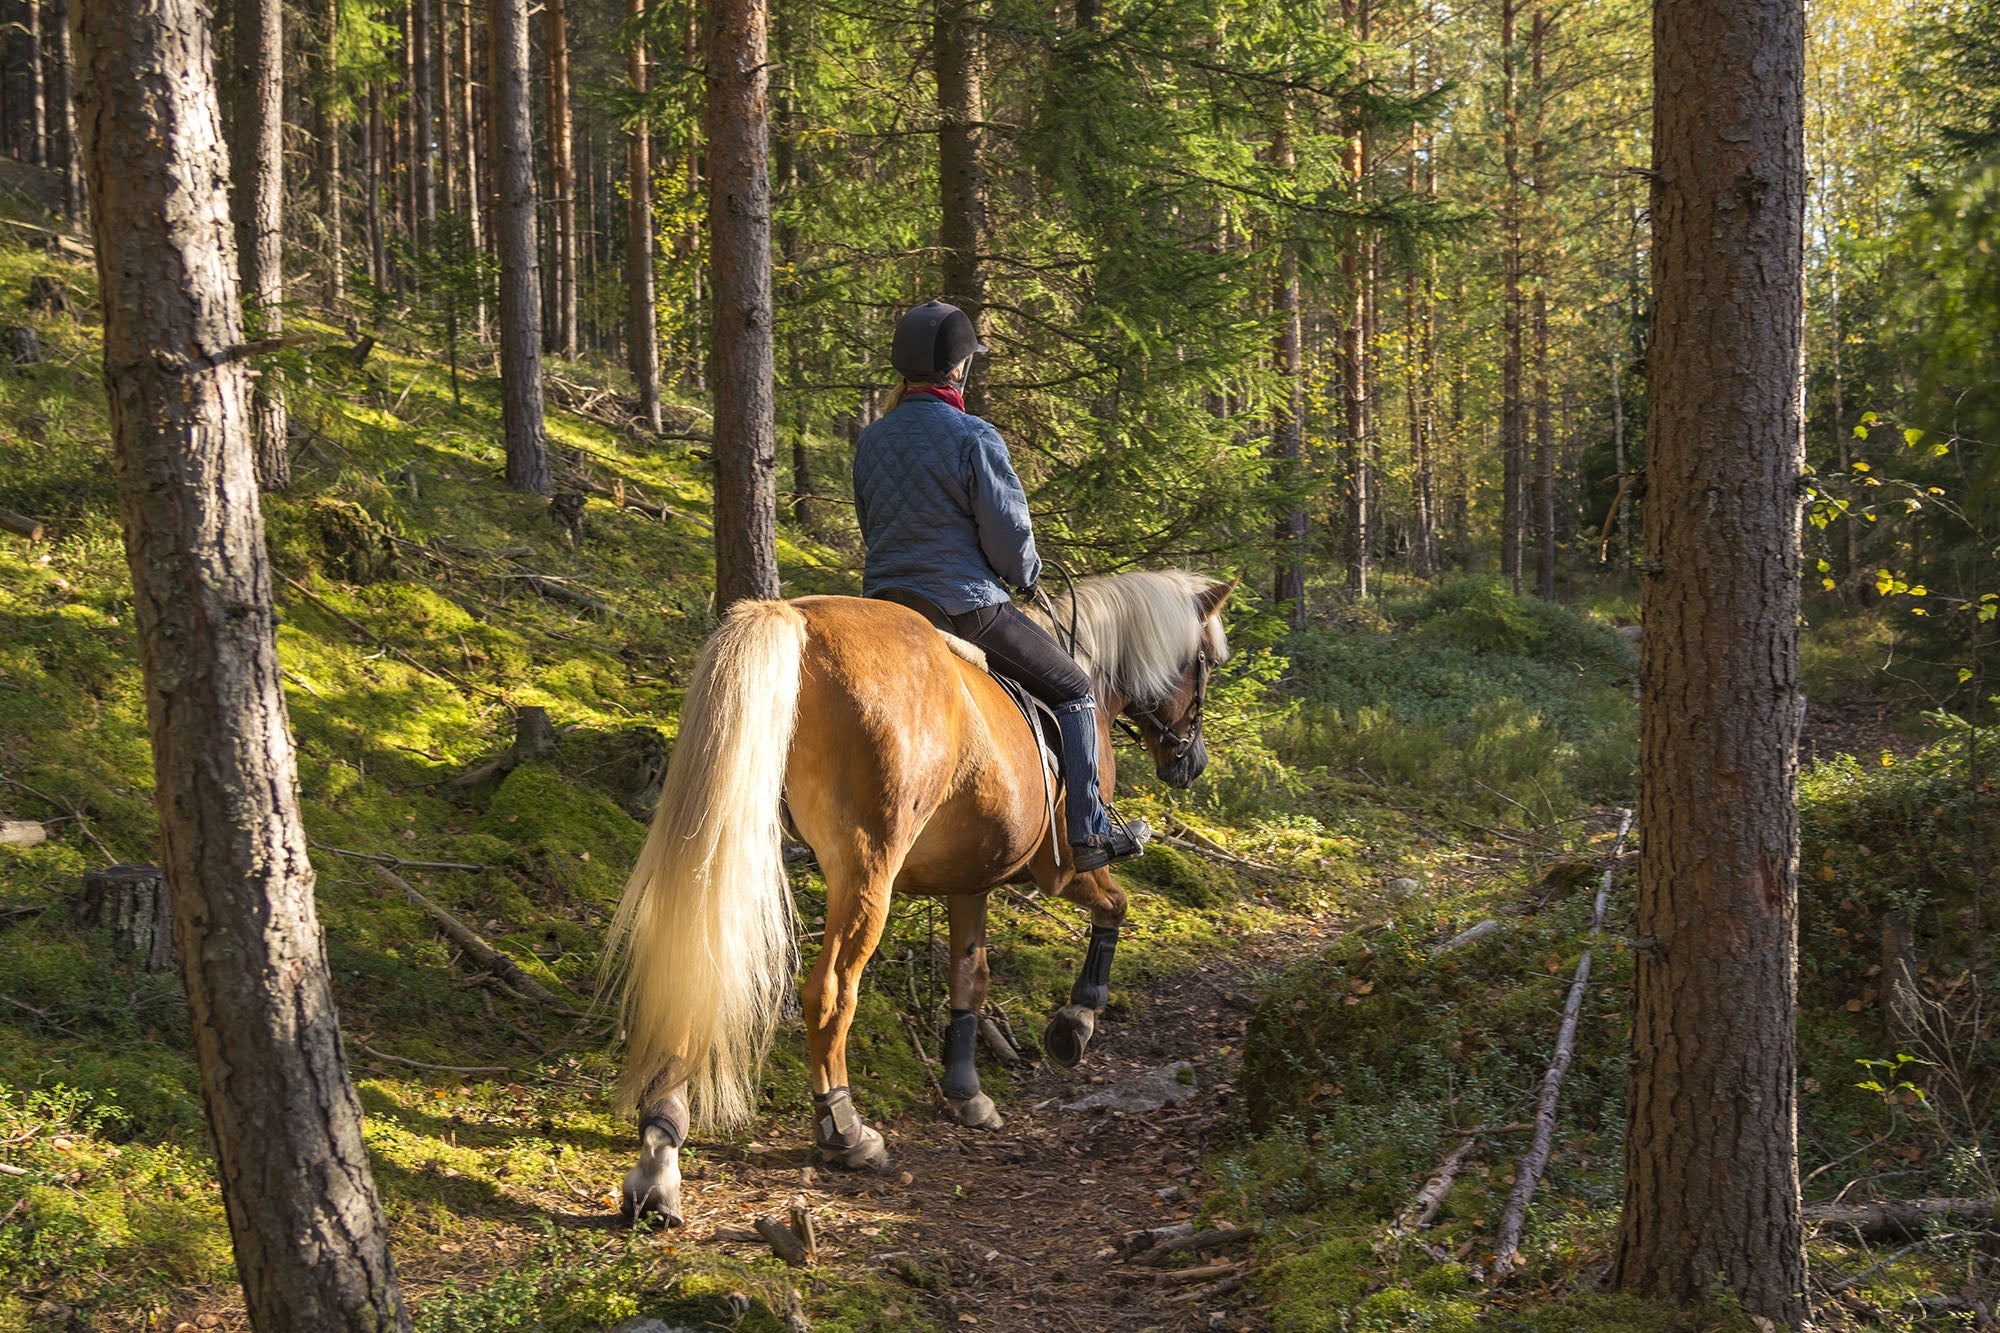 Woman horseback riding through a forest trail